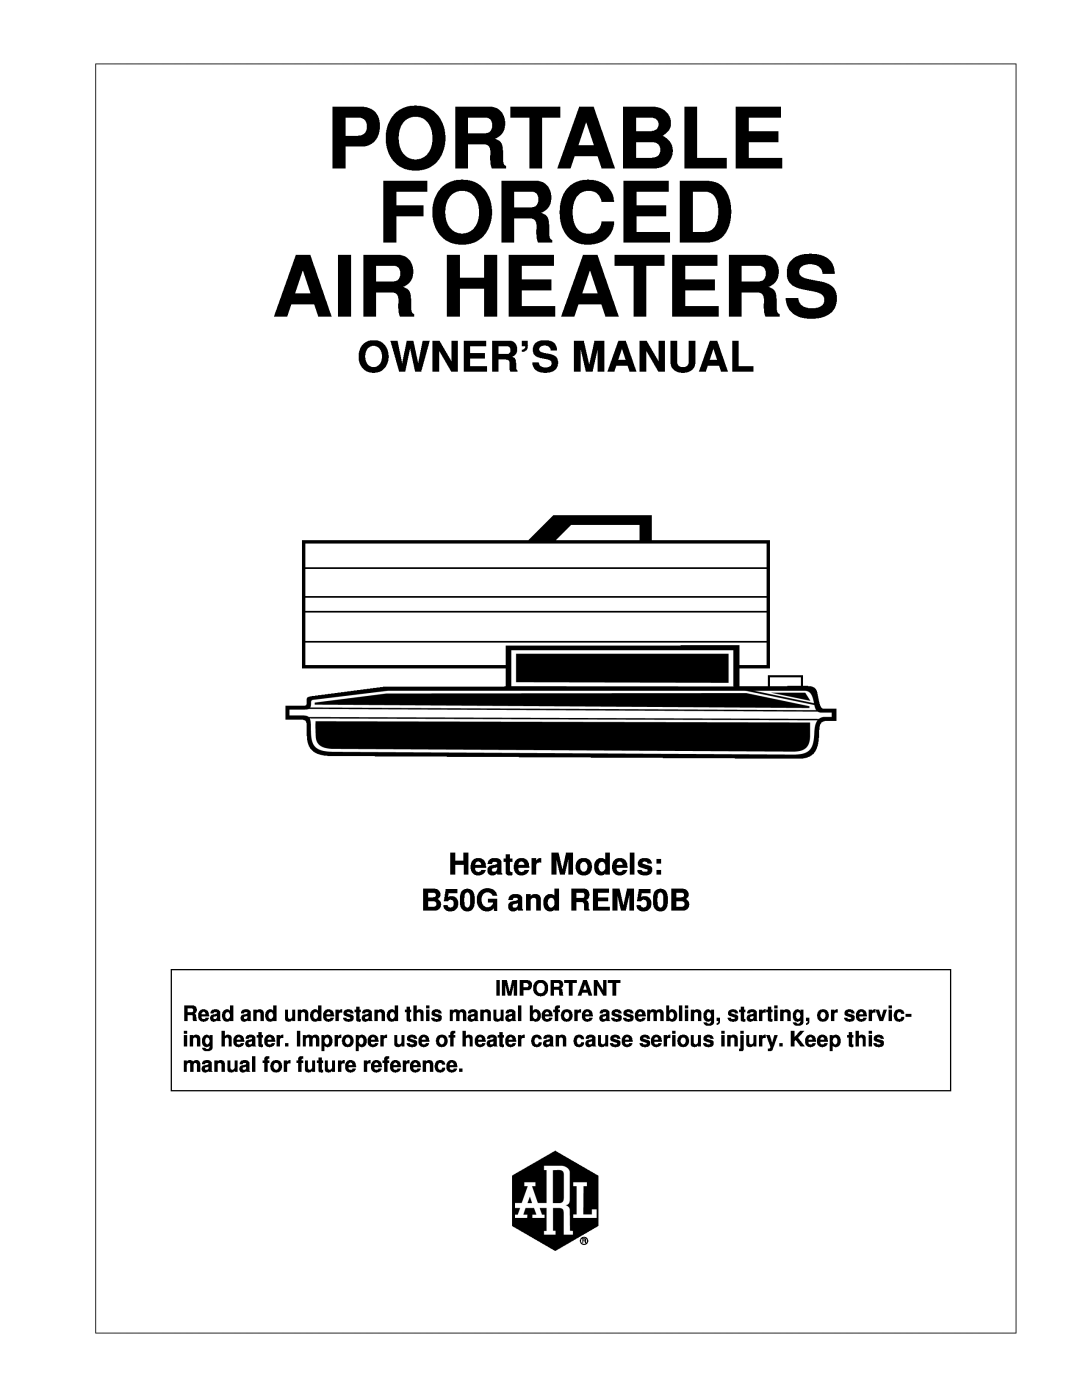 Desa owner manual Heater Models B50G and REM50B, Portable Forced Air Heaters, Arl Logo 